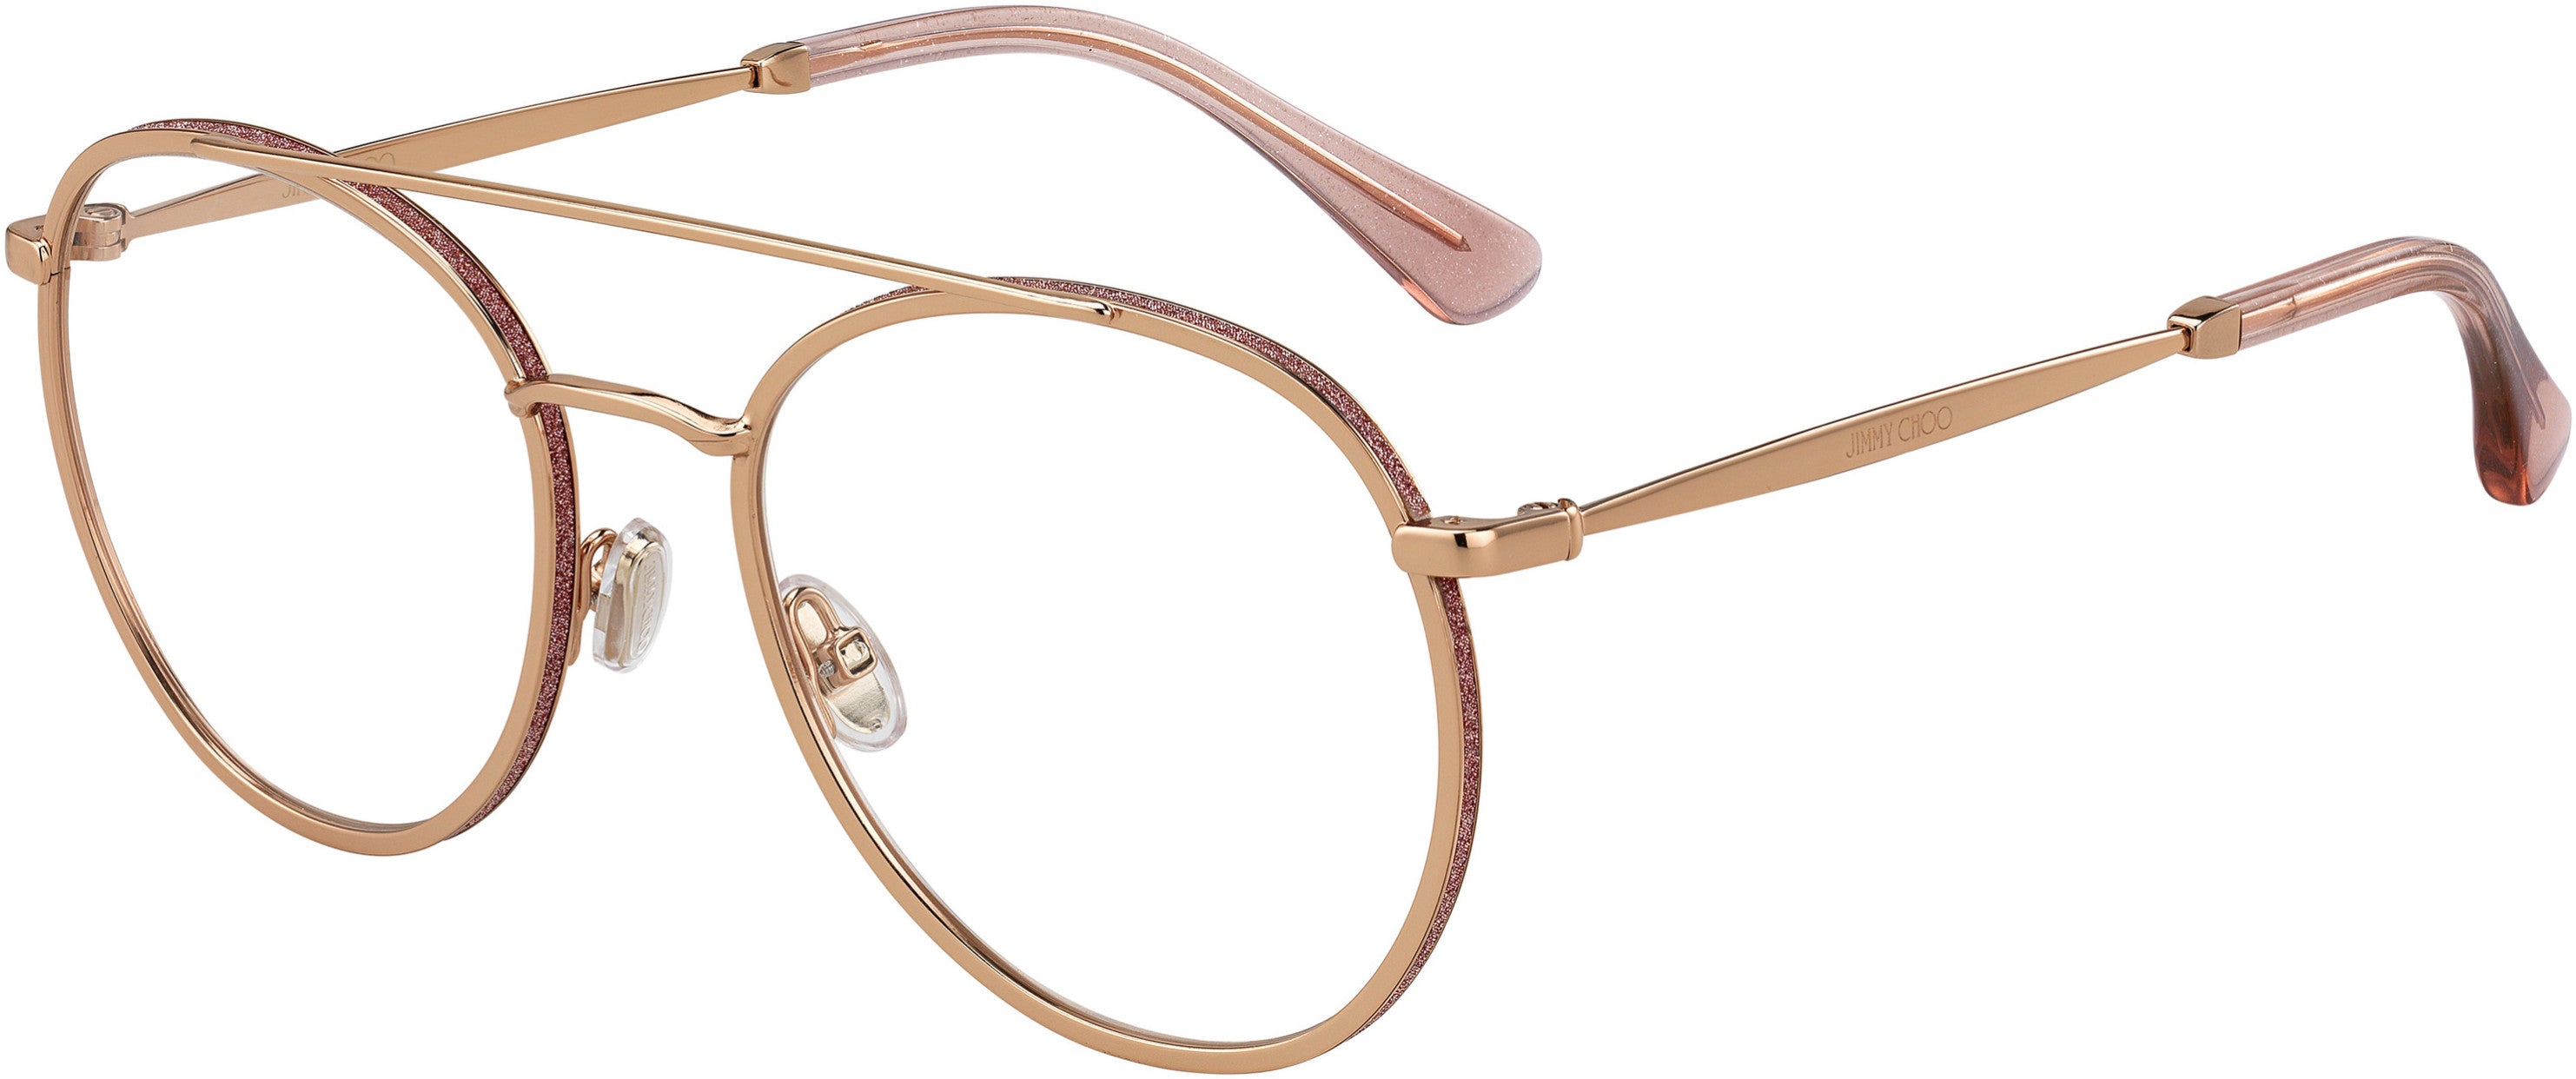  Jimmy Choo 230 Oval Modified Eyeglasses 0EYR-0EYR  Gold Pink (00 Demo Lens)